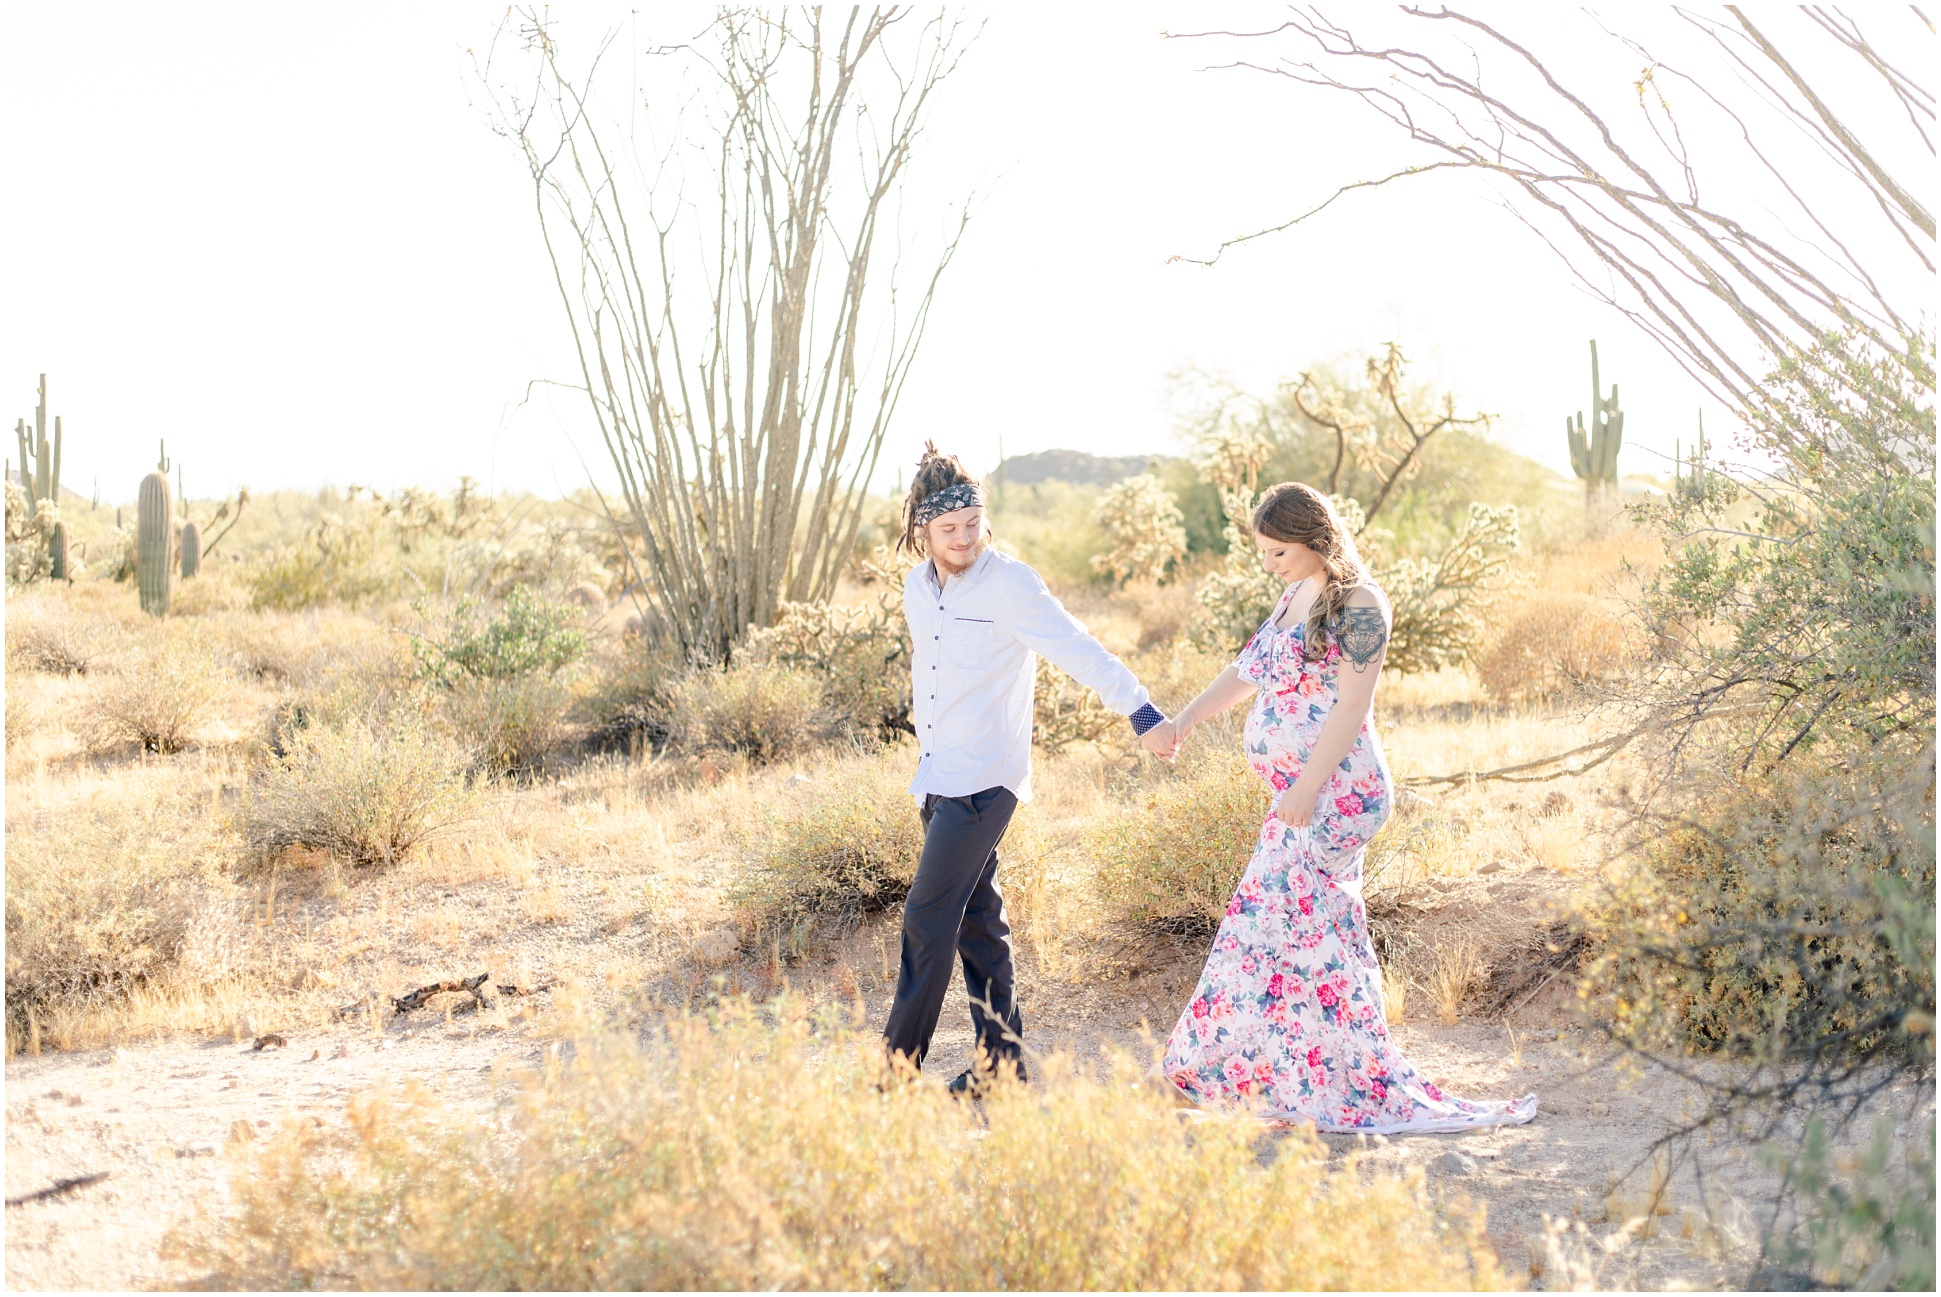 Daniel guiding Miranda and her pregnant belly through the desert for a stroll